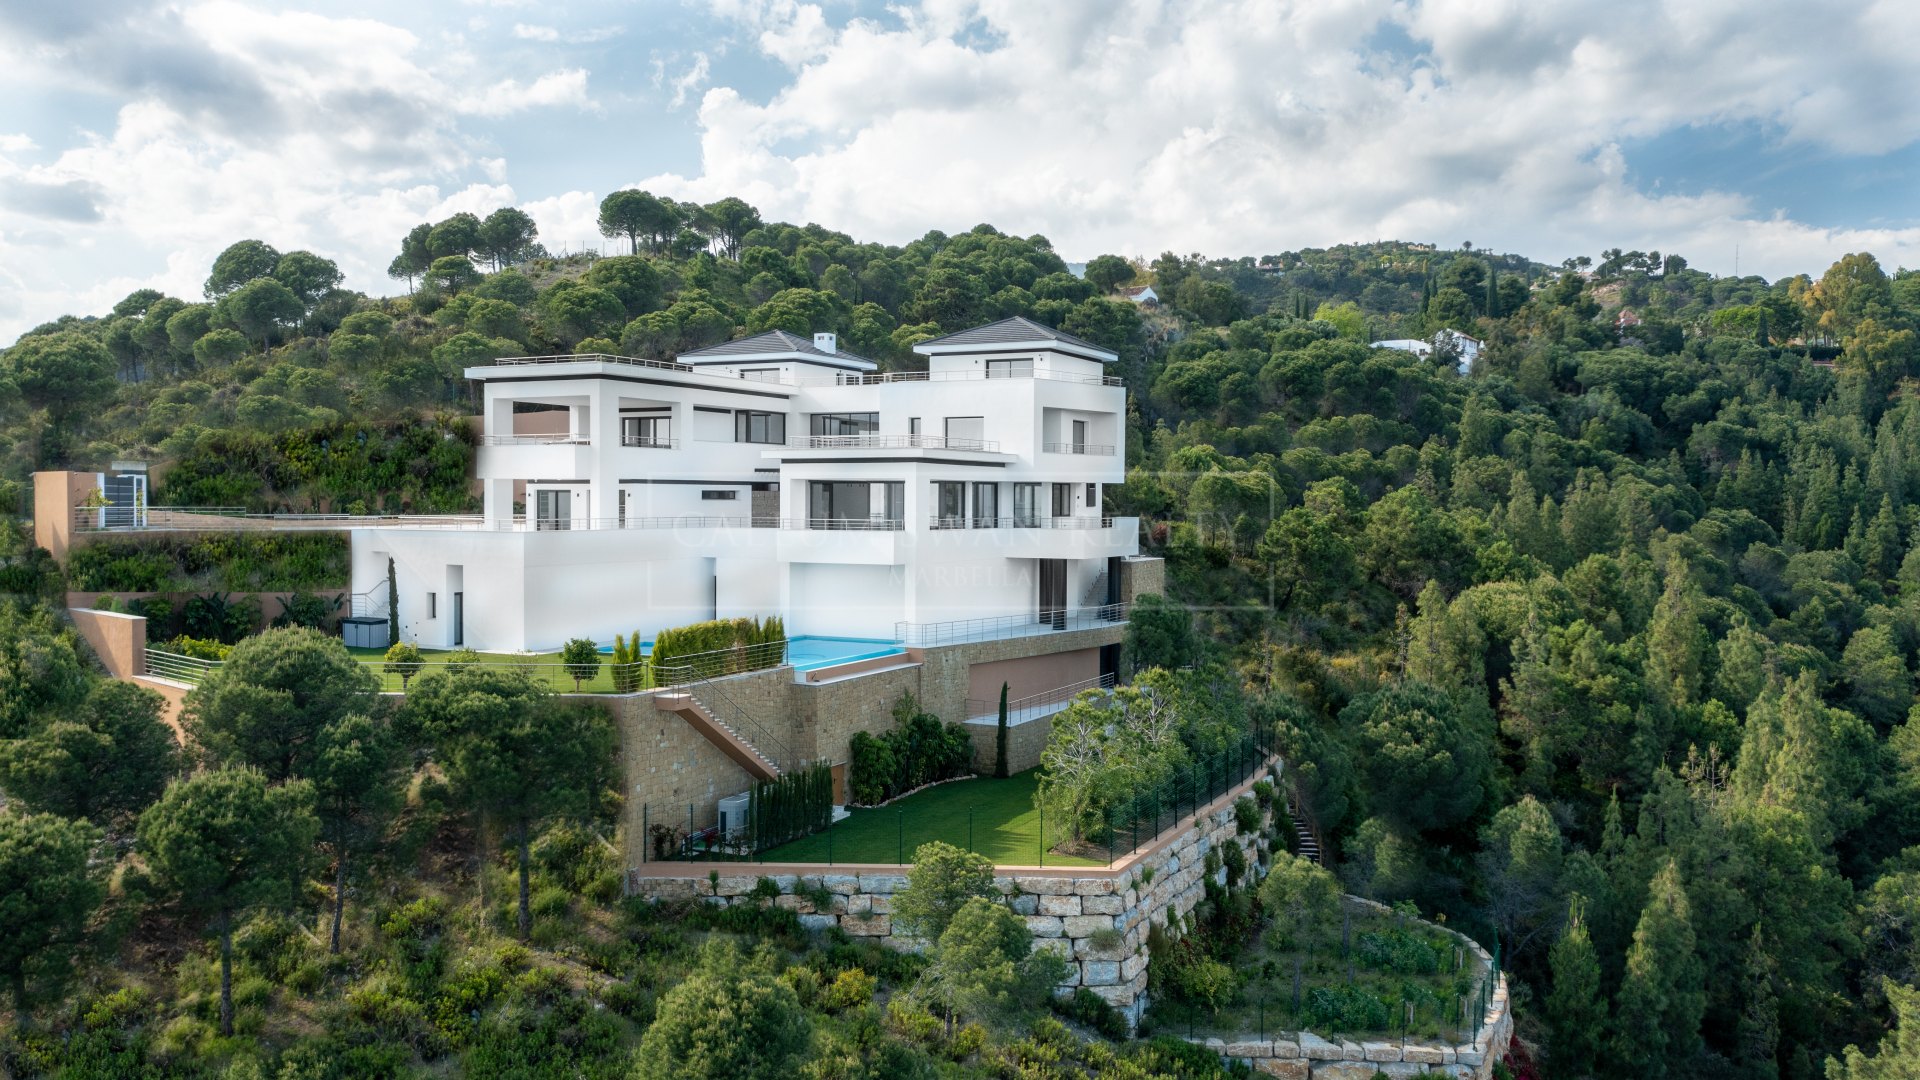 Modern luxury villa with spectacular open views